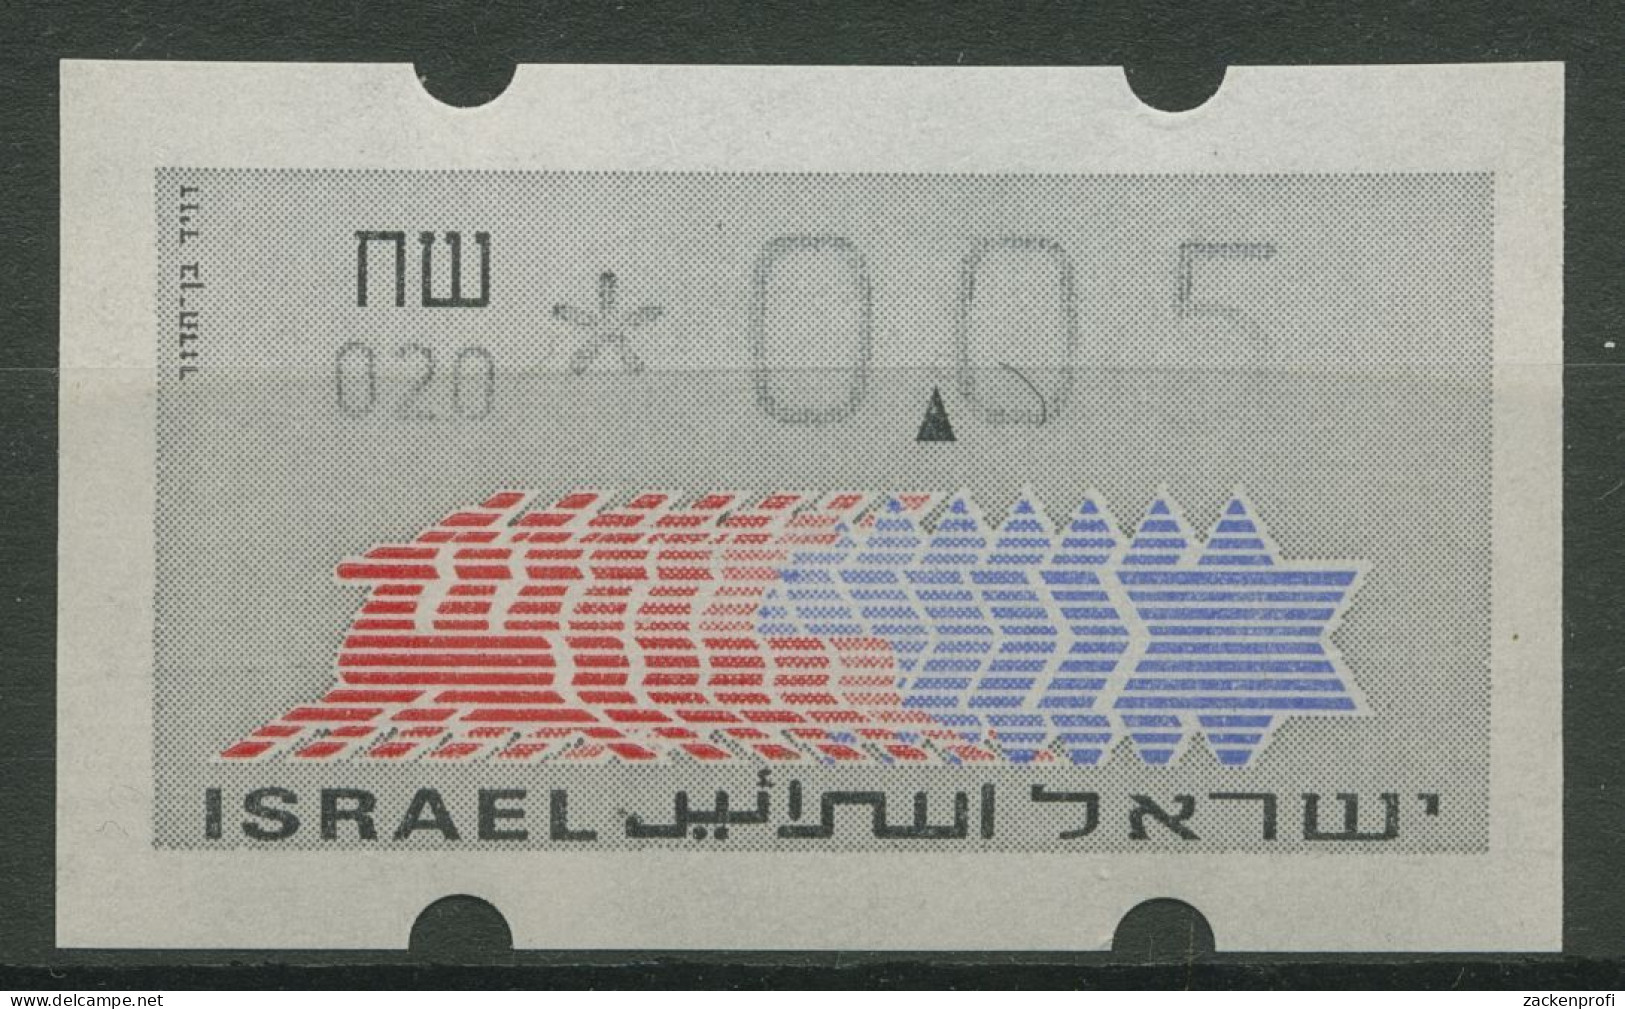 Israel ATM 1990 Hirsch Automat 020 Einzelwert ATM 3.3.20 Postfrisch - Frankeervignetten (Frama)